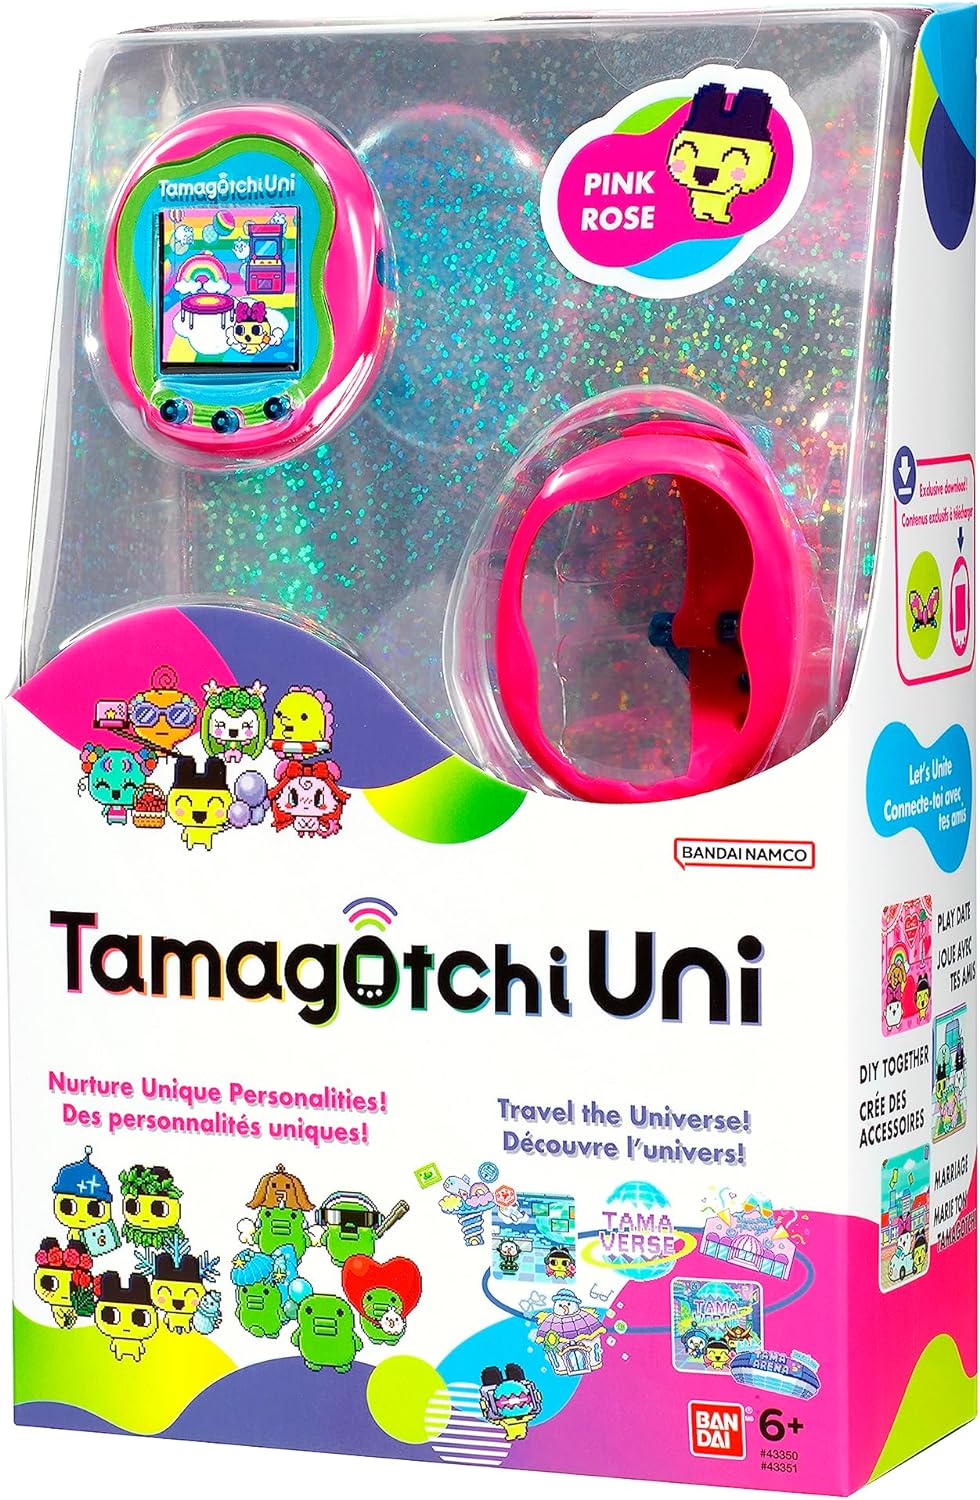 Tamagotchi Uni - Pink (43351), Small